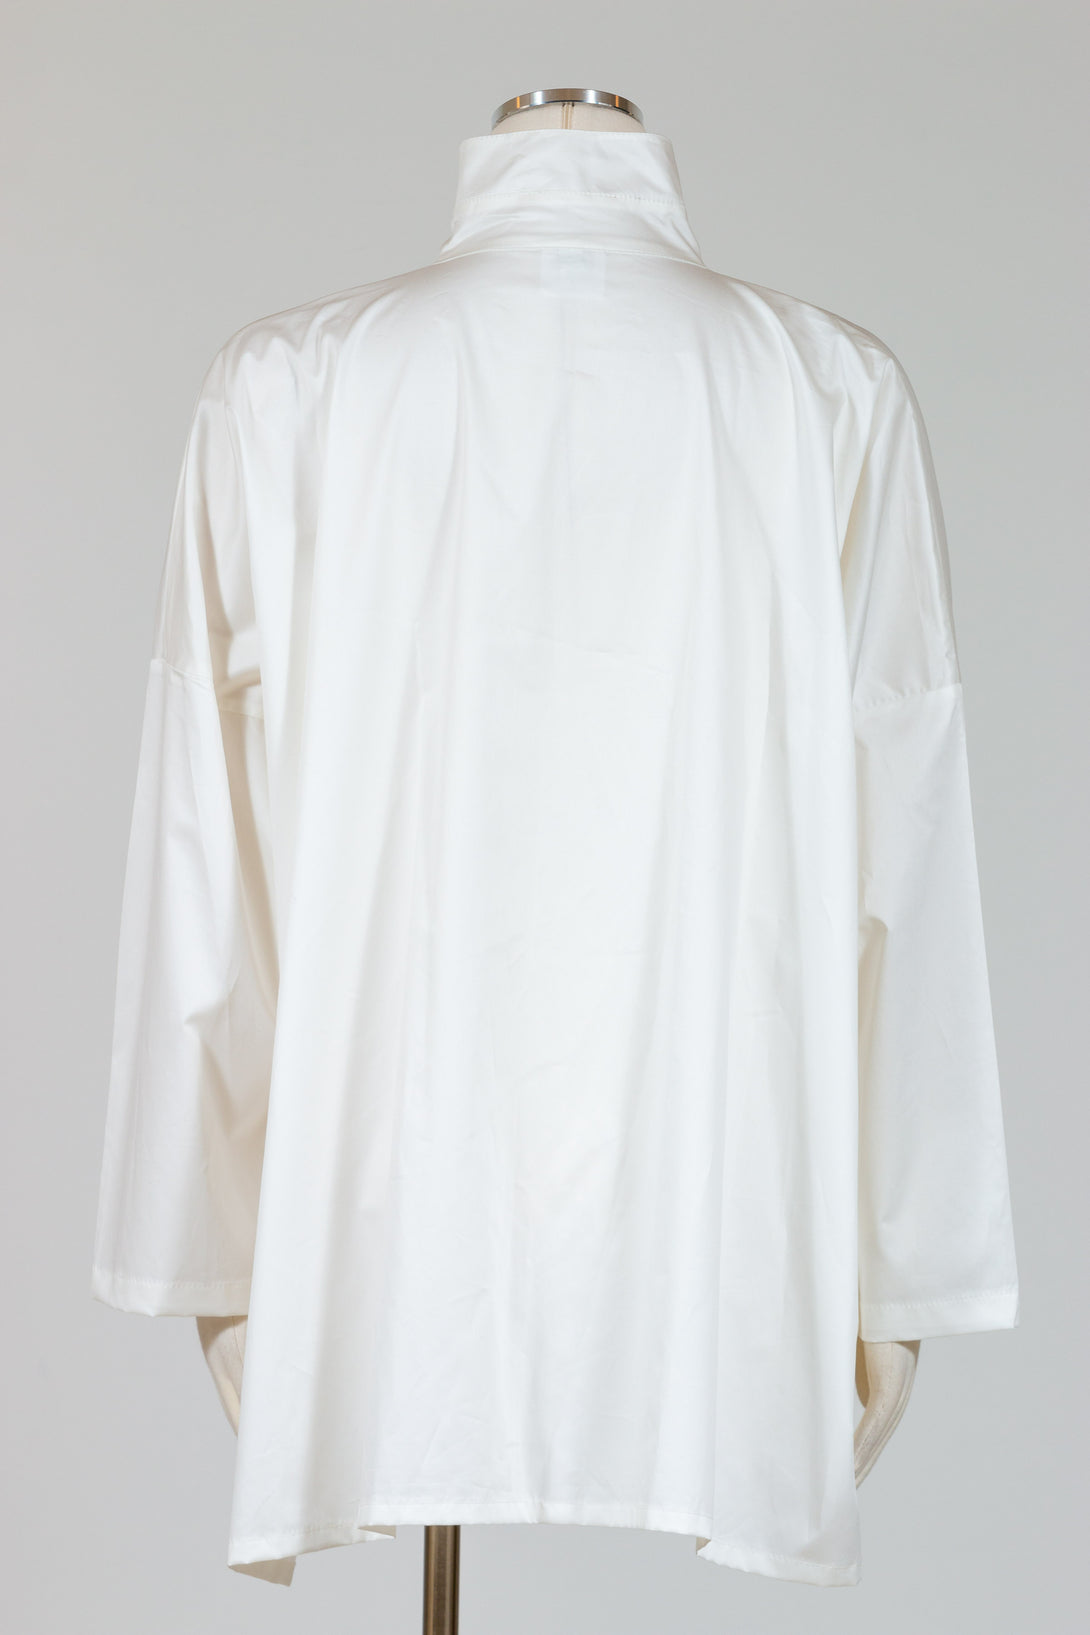 Planet-LaurenG-Signature-Shirt-White